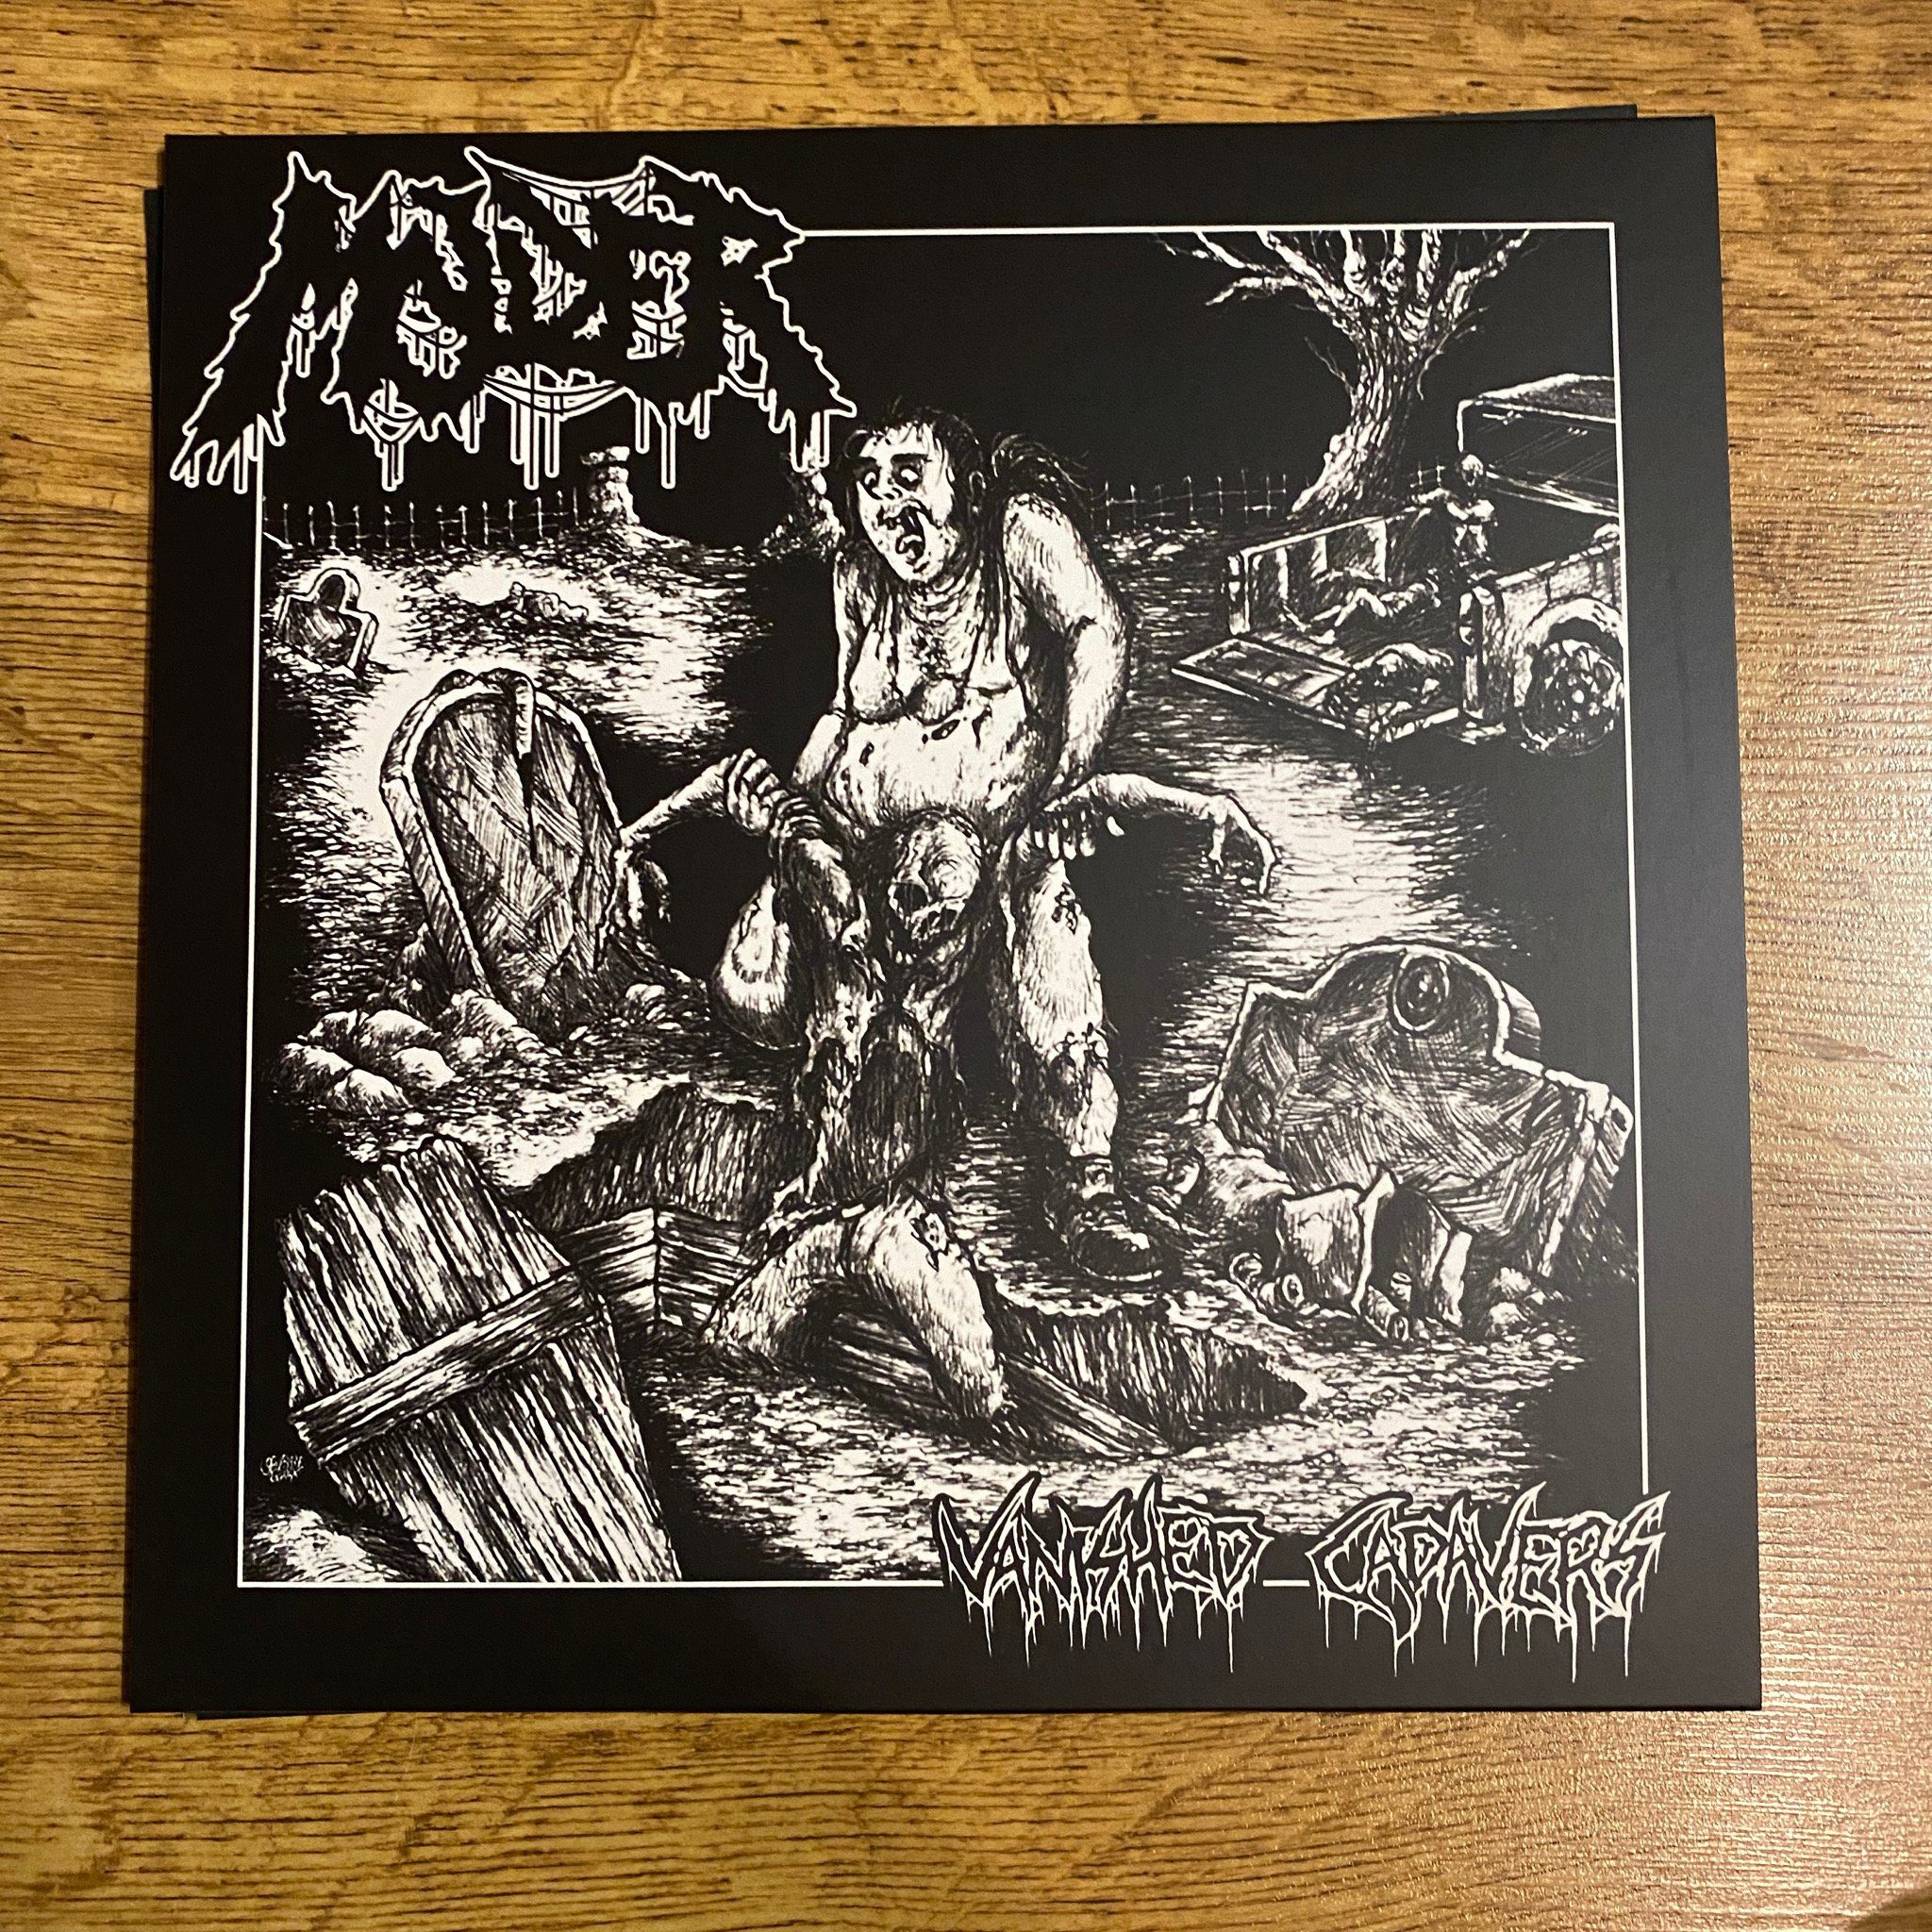 Photo of the Molder - "Vanished Cadavers" LP (yellow vinyl)